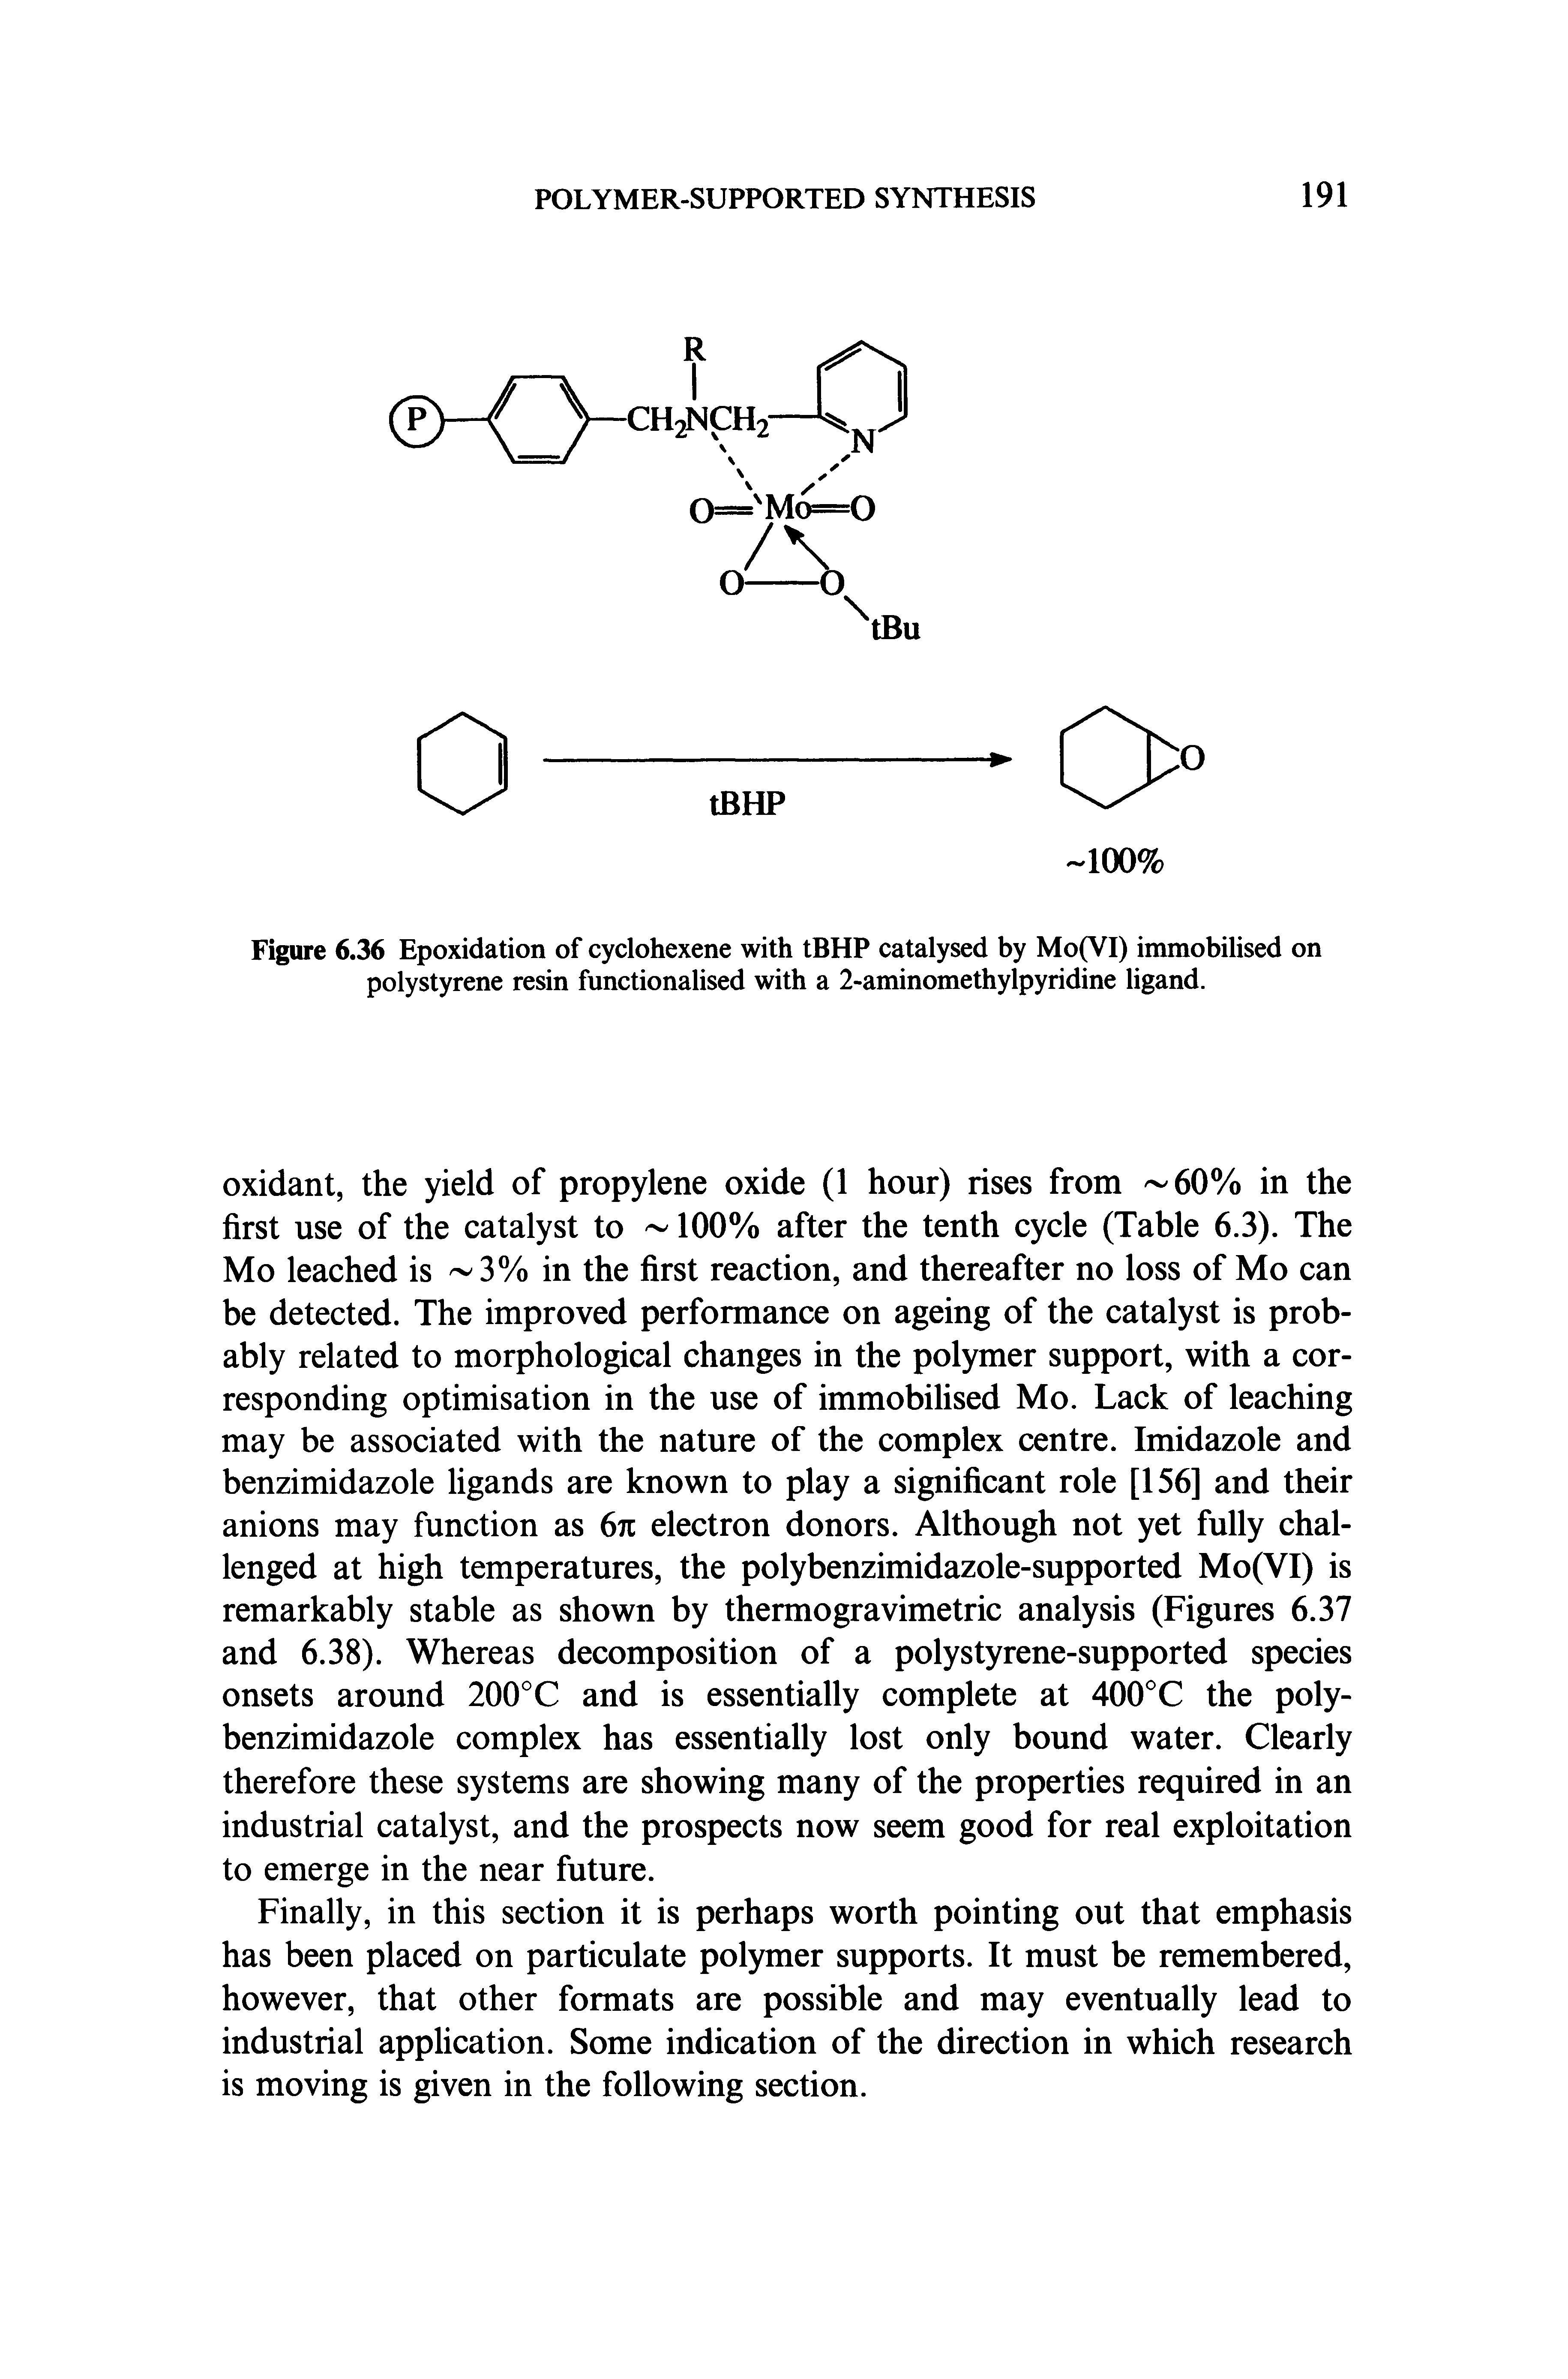 Figure 6.36 Epoxidation of cyclohexene with tBHP catalysed by Mo(VI) immobilised on polystyrene resin functionalised with a 2-aminomethylpyridine ligand.